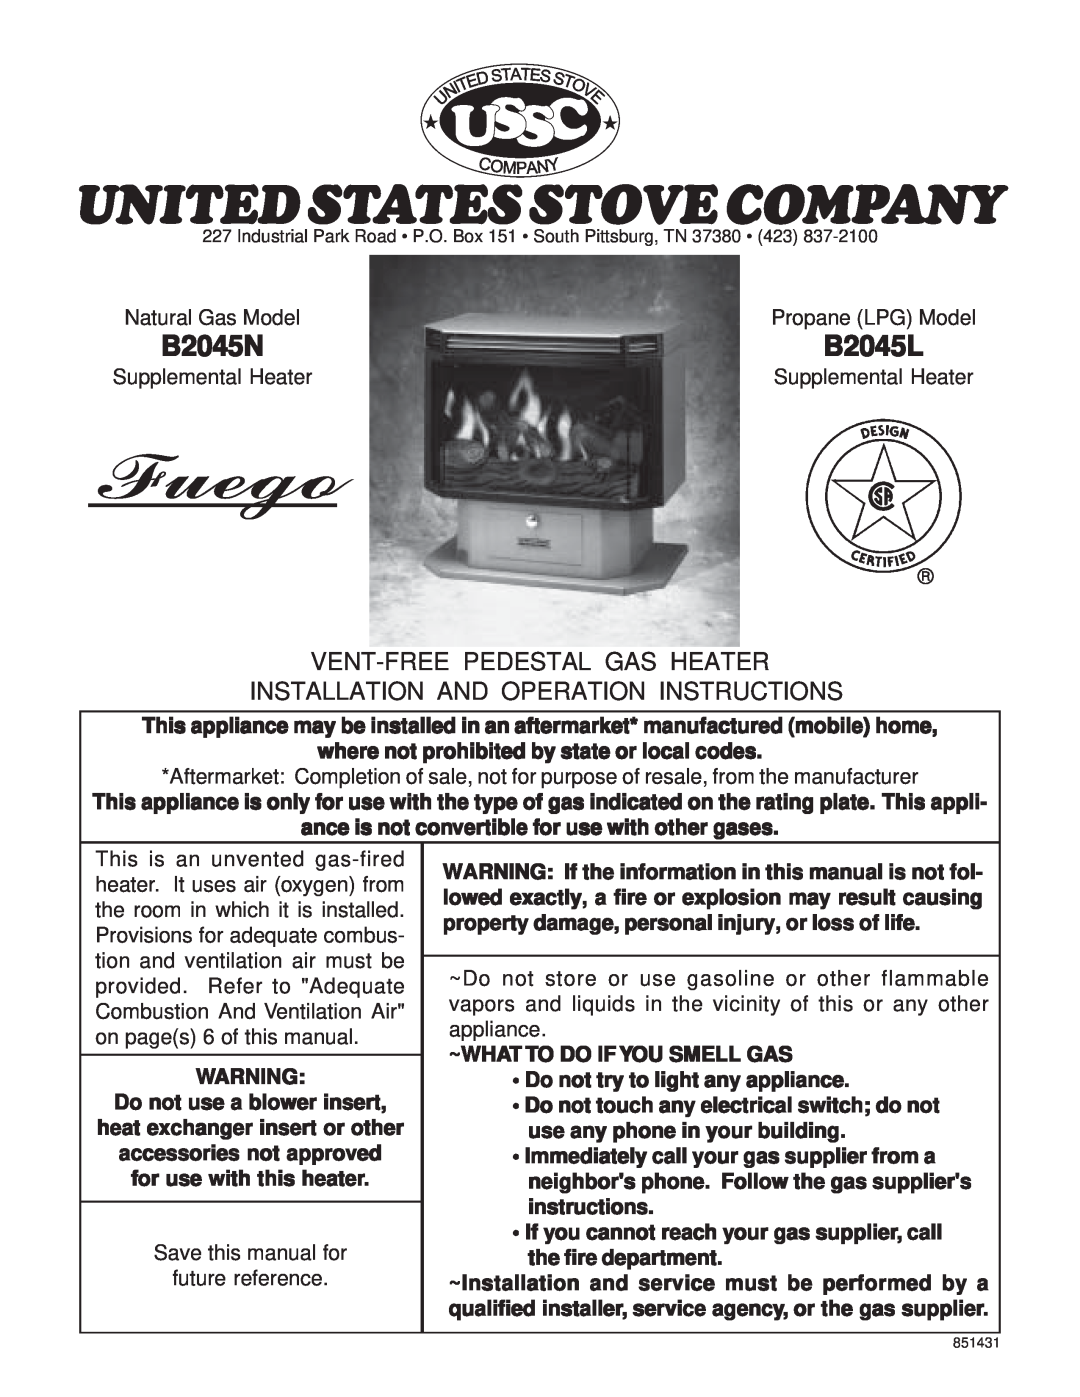 United States Stove B2045N manual Fuego, Unitedstatesstovecompany, B2045L, Vent-Freepedestal Gas Heater, appliance 